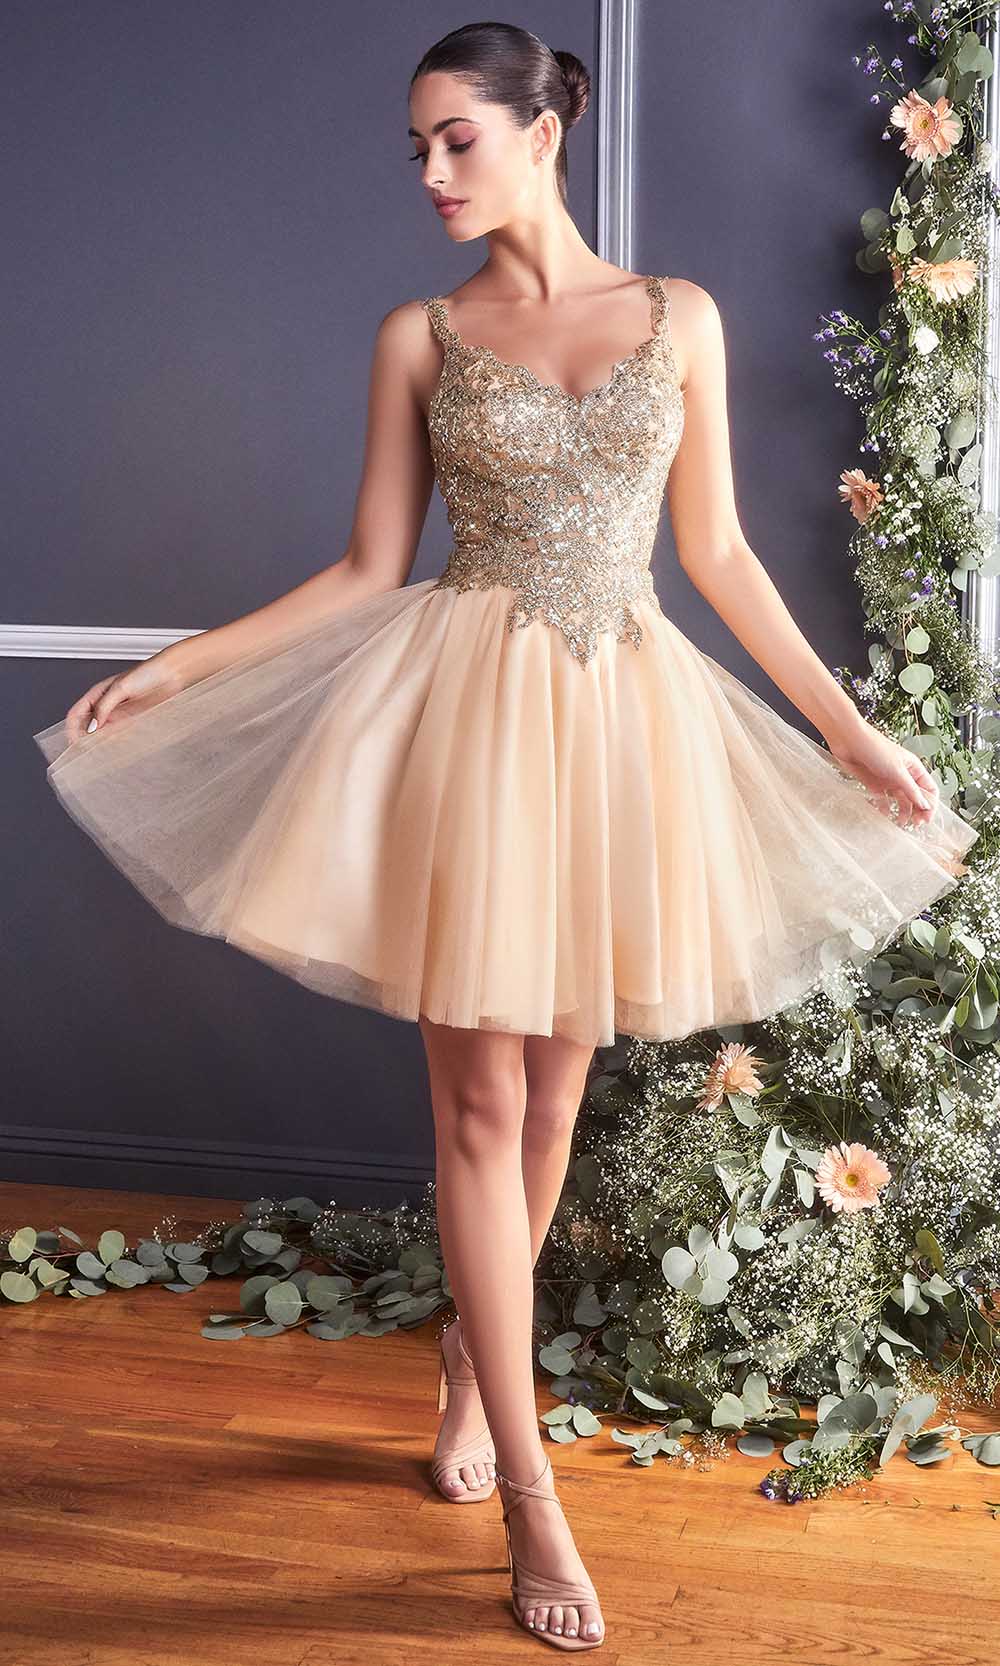 Ladivine - 9239 Metallic Appliqued Fit And Flare Short Dress In Champagne and Goldgrade 8 grad dresses, graduation dresses